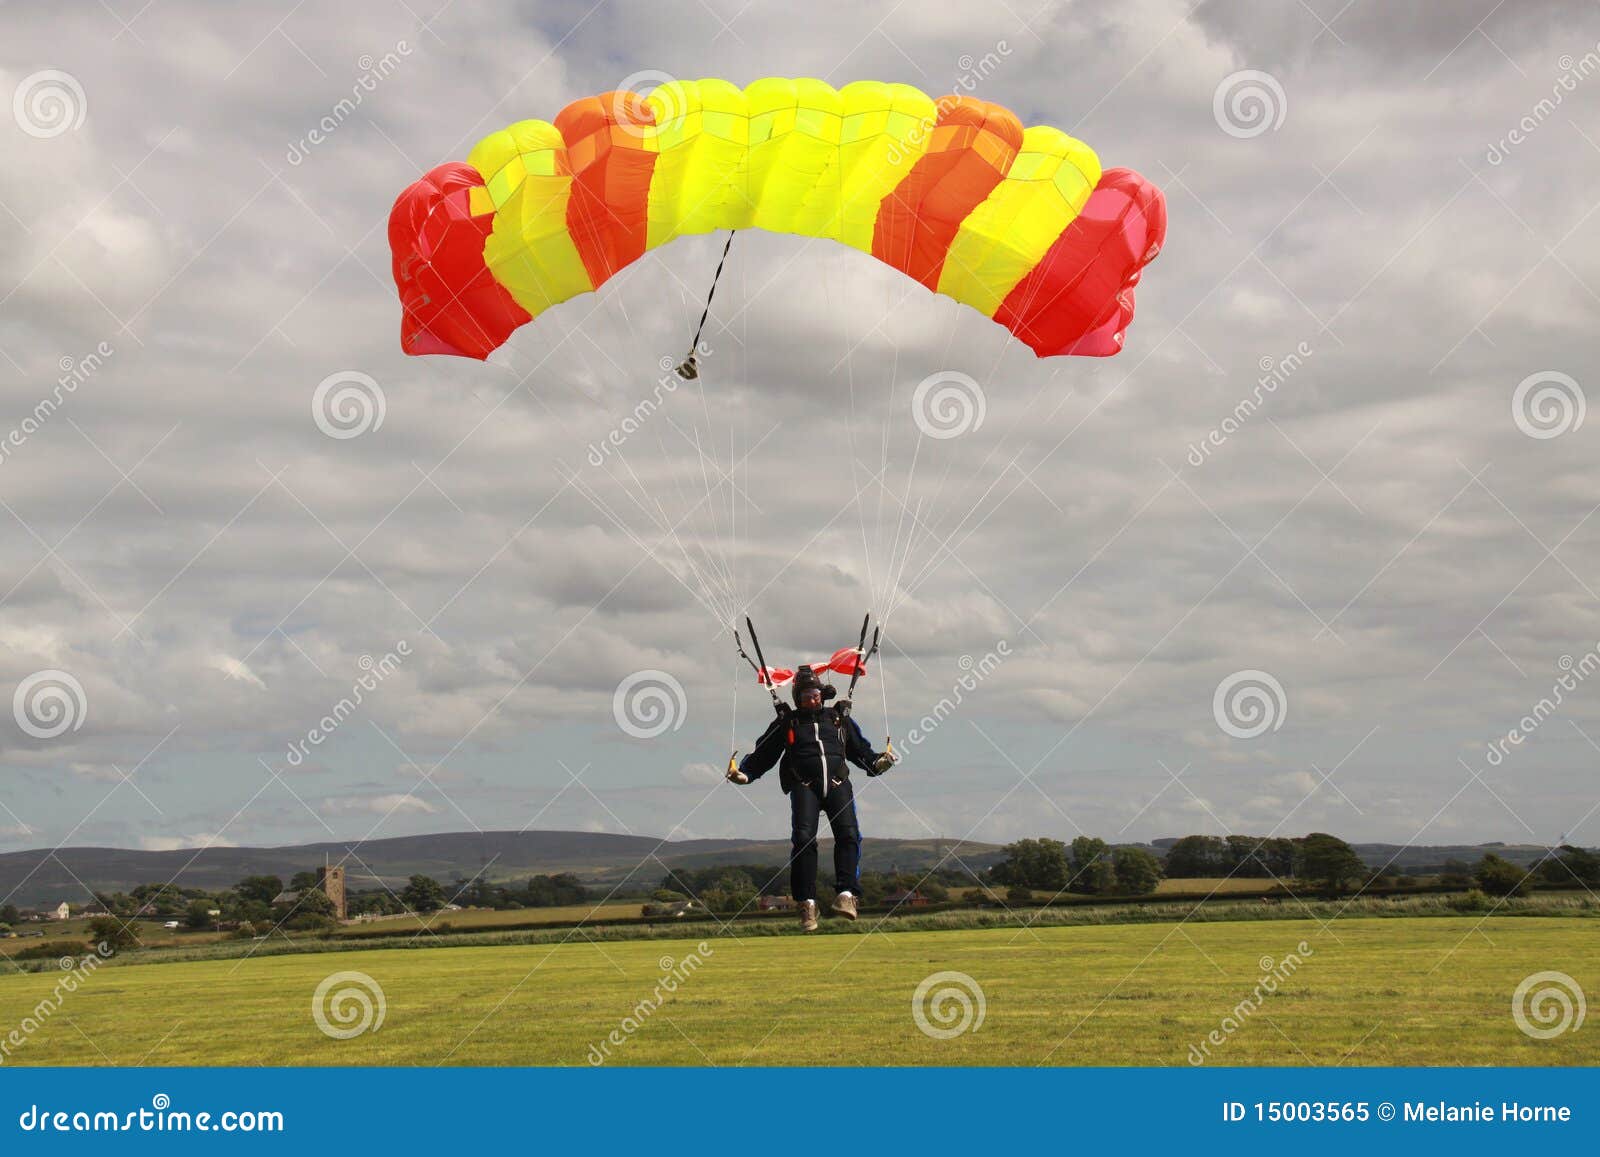 skydiver landing